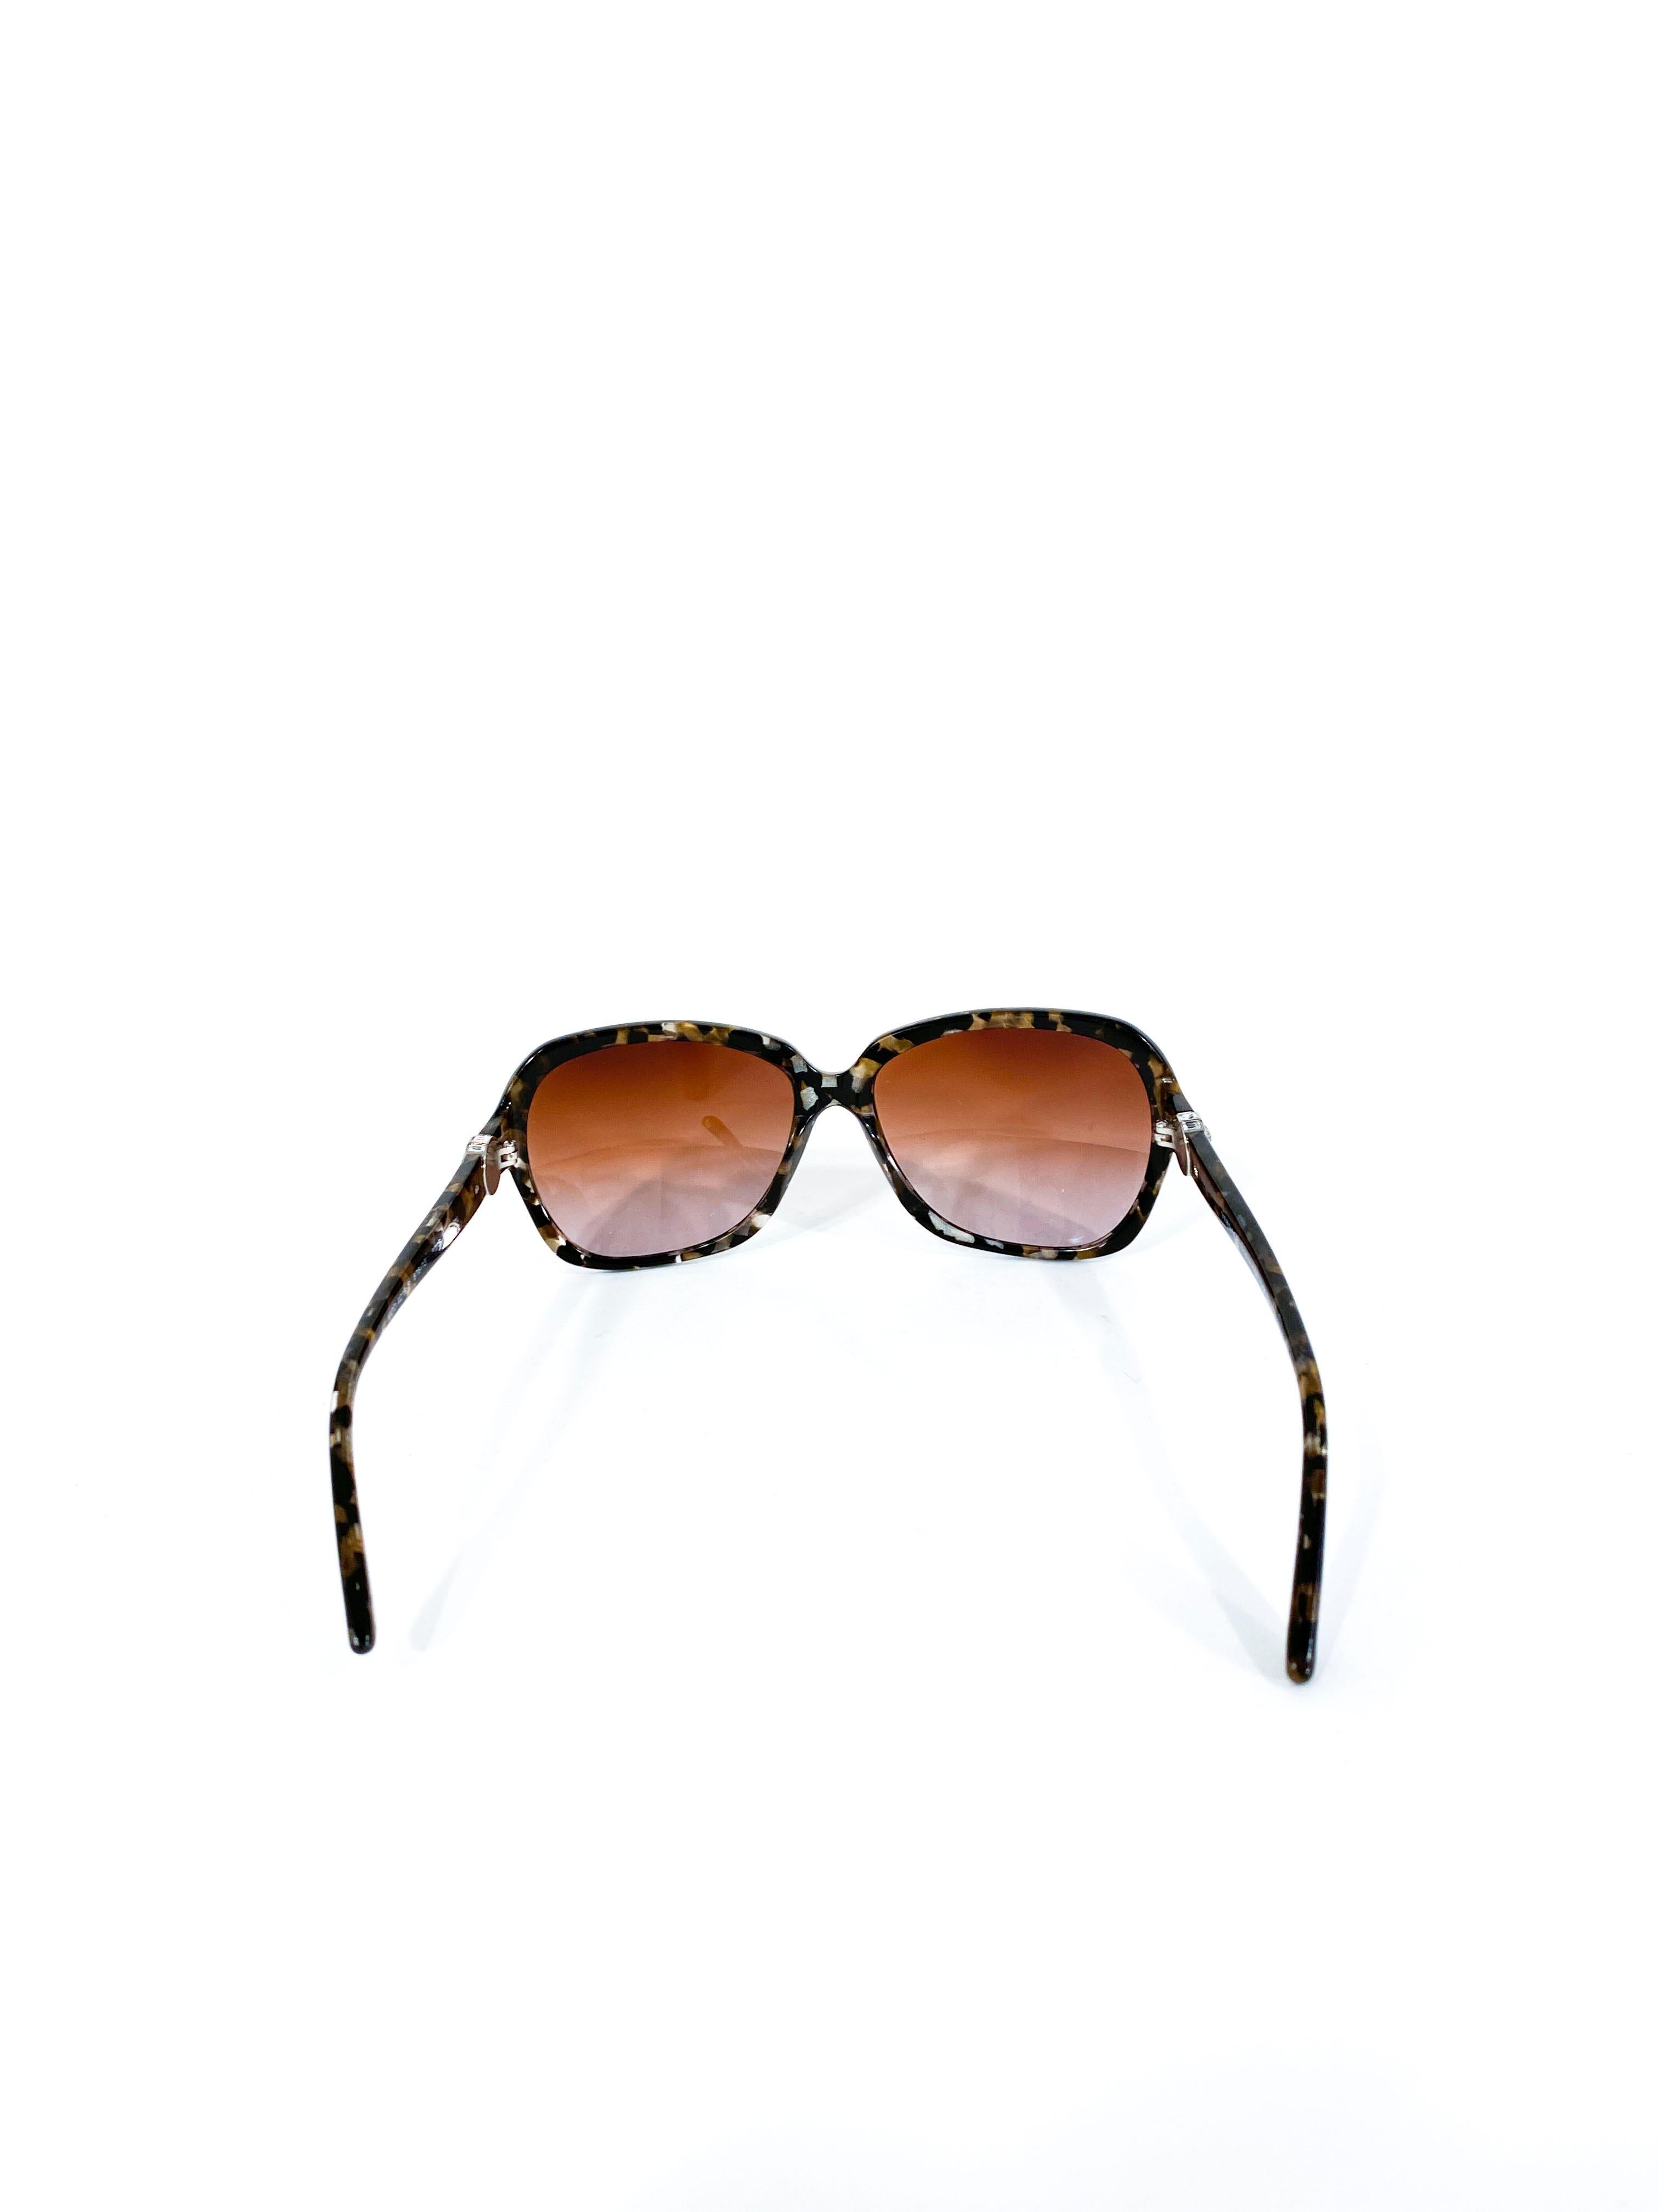 Women's Versace Tortoise Pattern Sunglasses